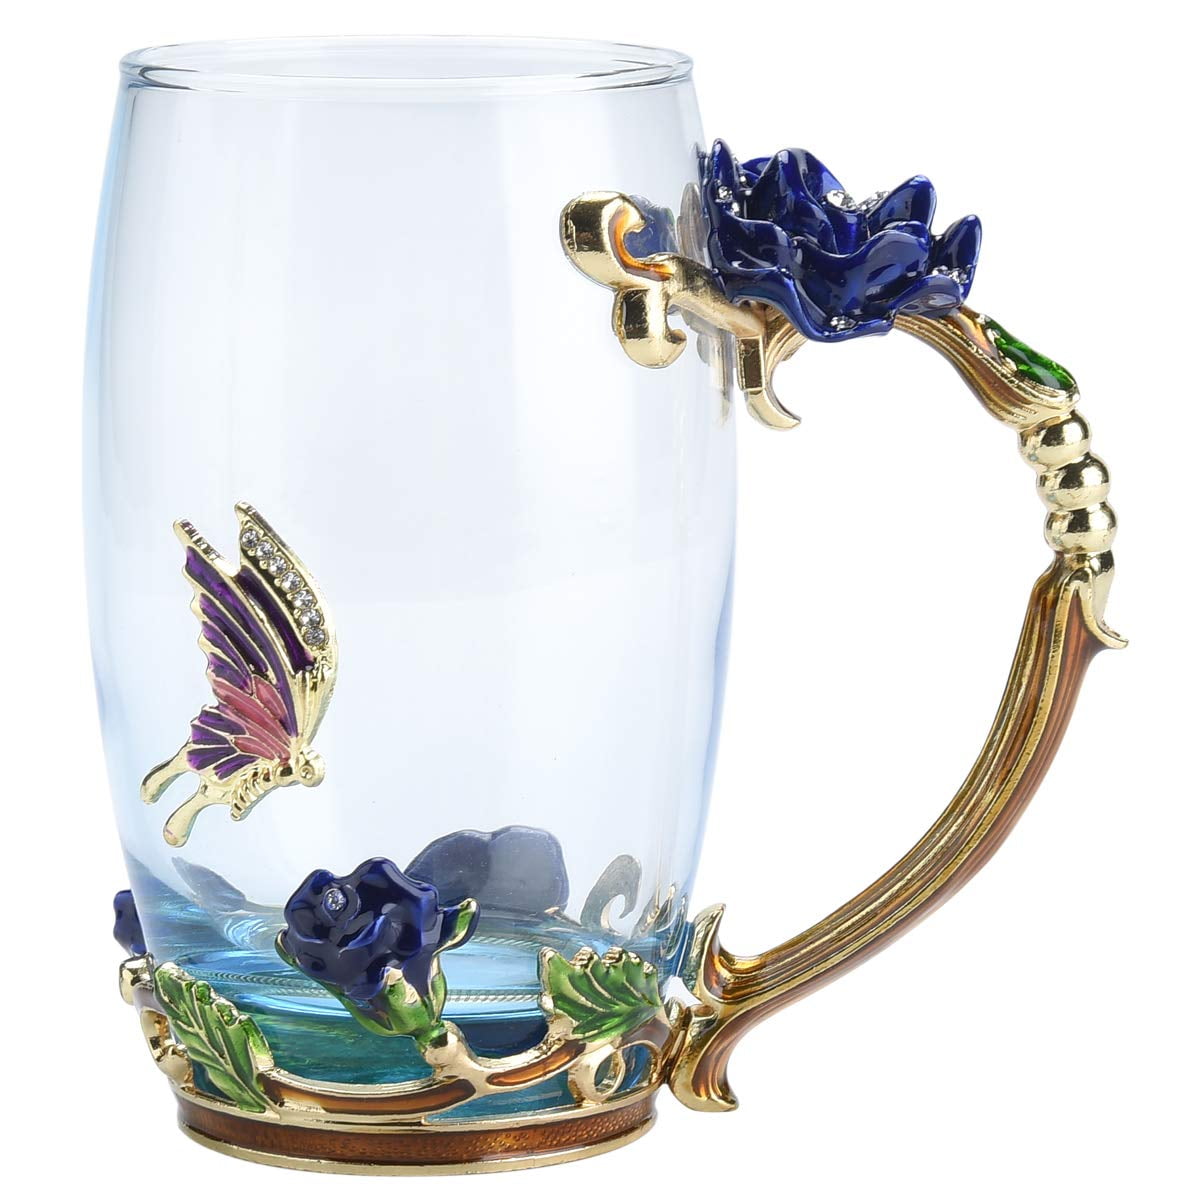 Handmade Crystal Enamel Flower Glass Tea Cup Coffee Mugs W/ Gift Box Home Decor